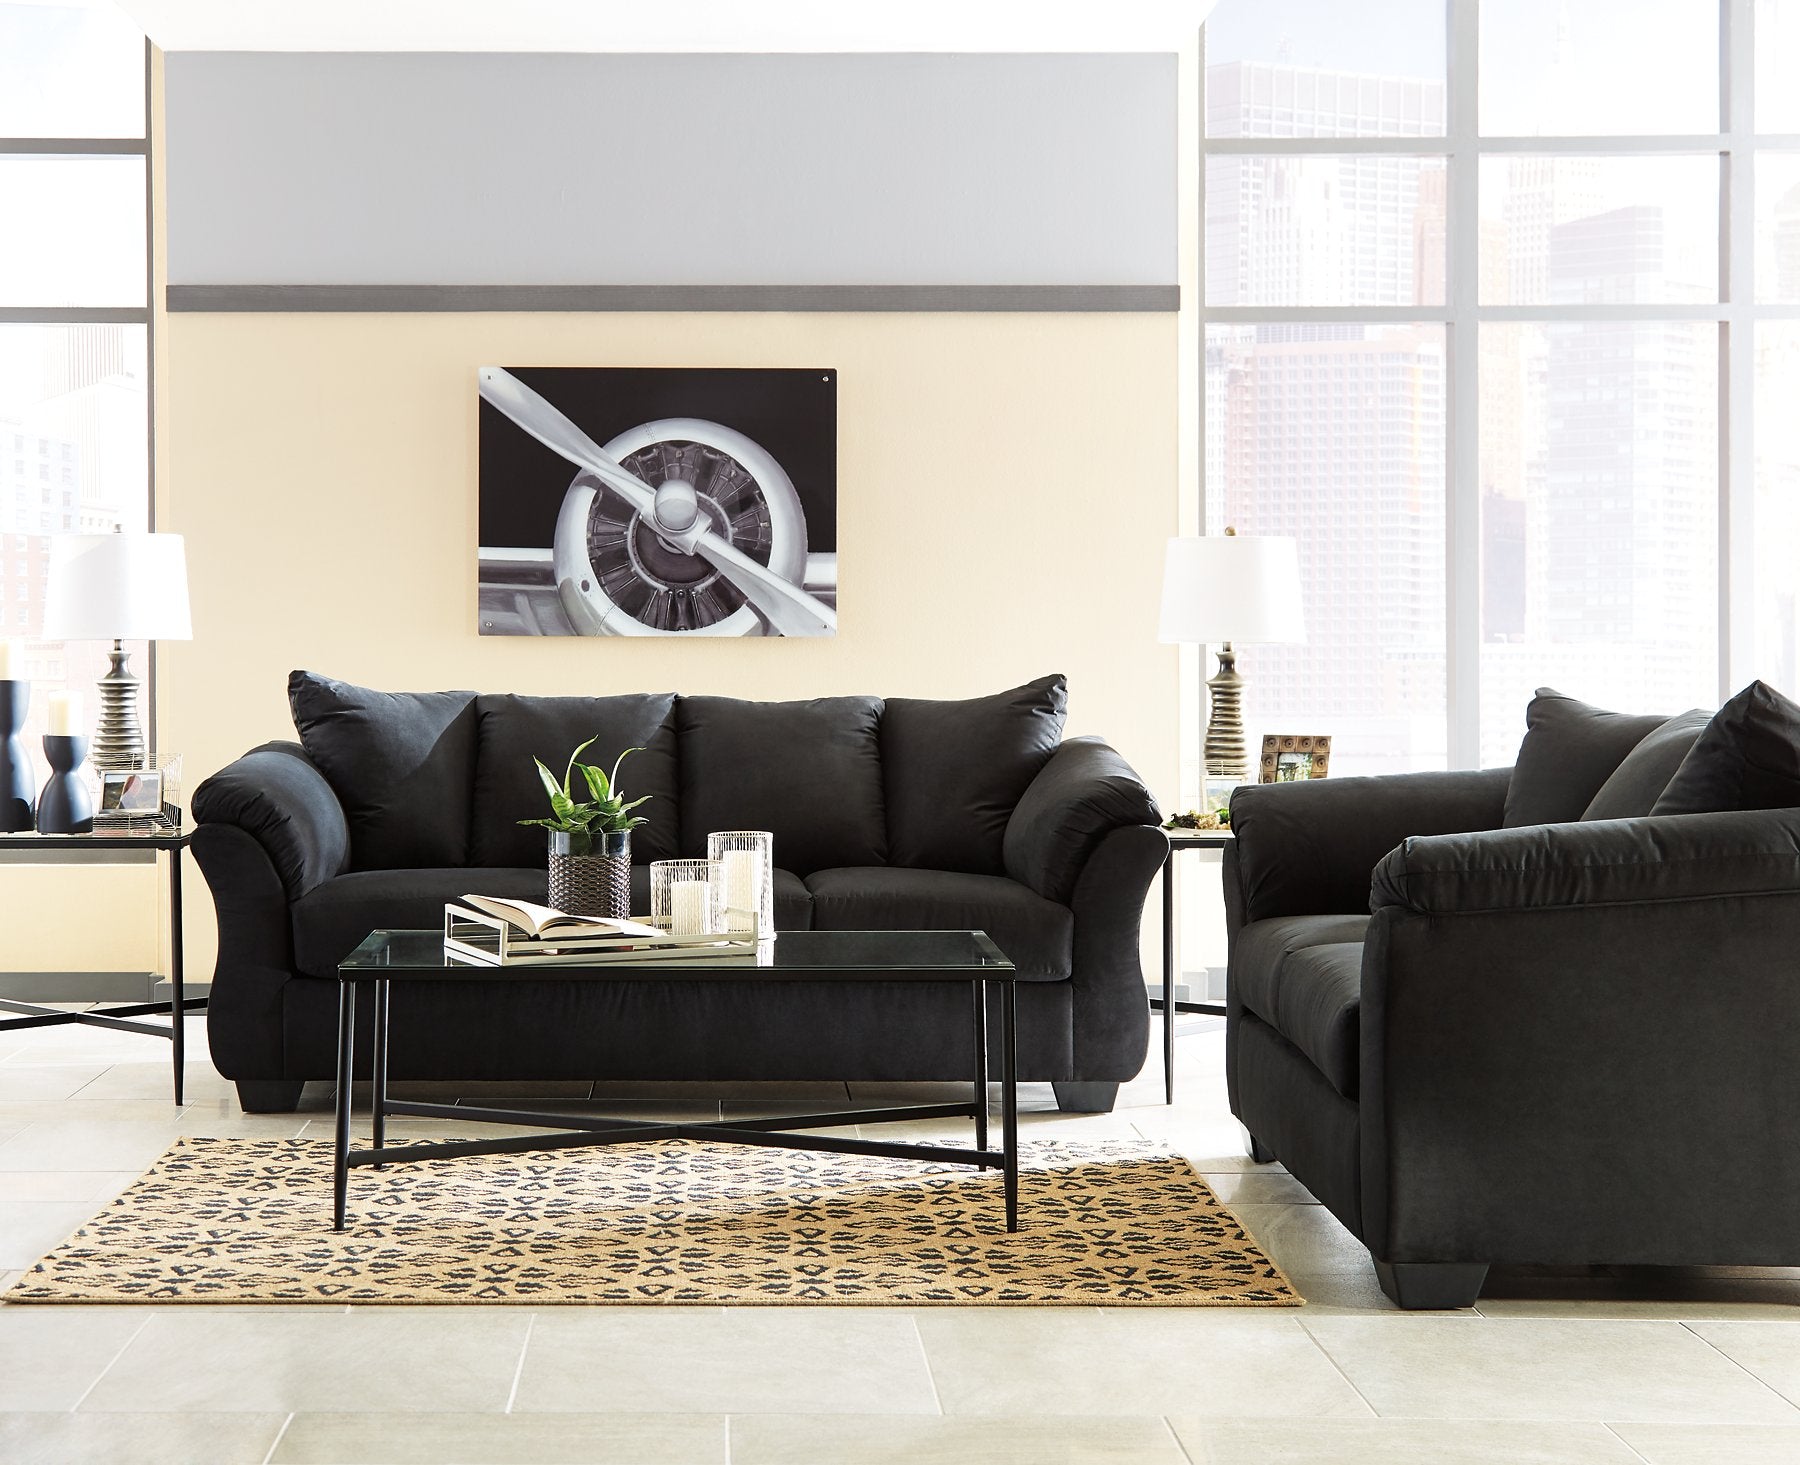 Darcy Living Room Set - Half Price Furniture